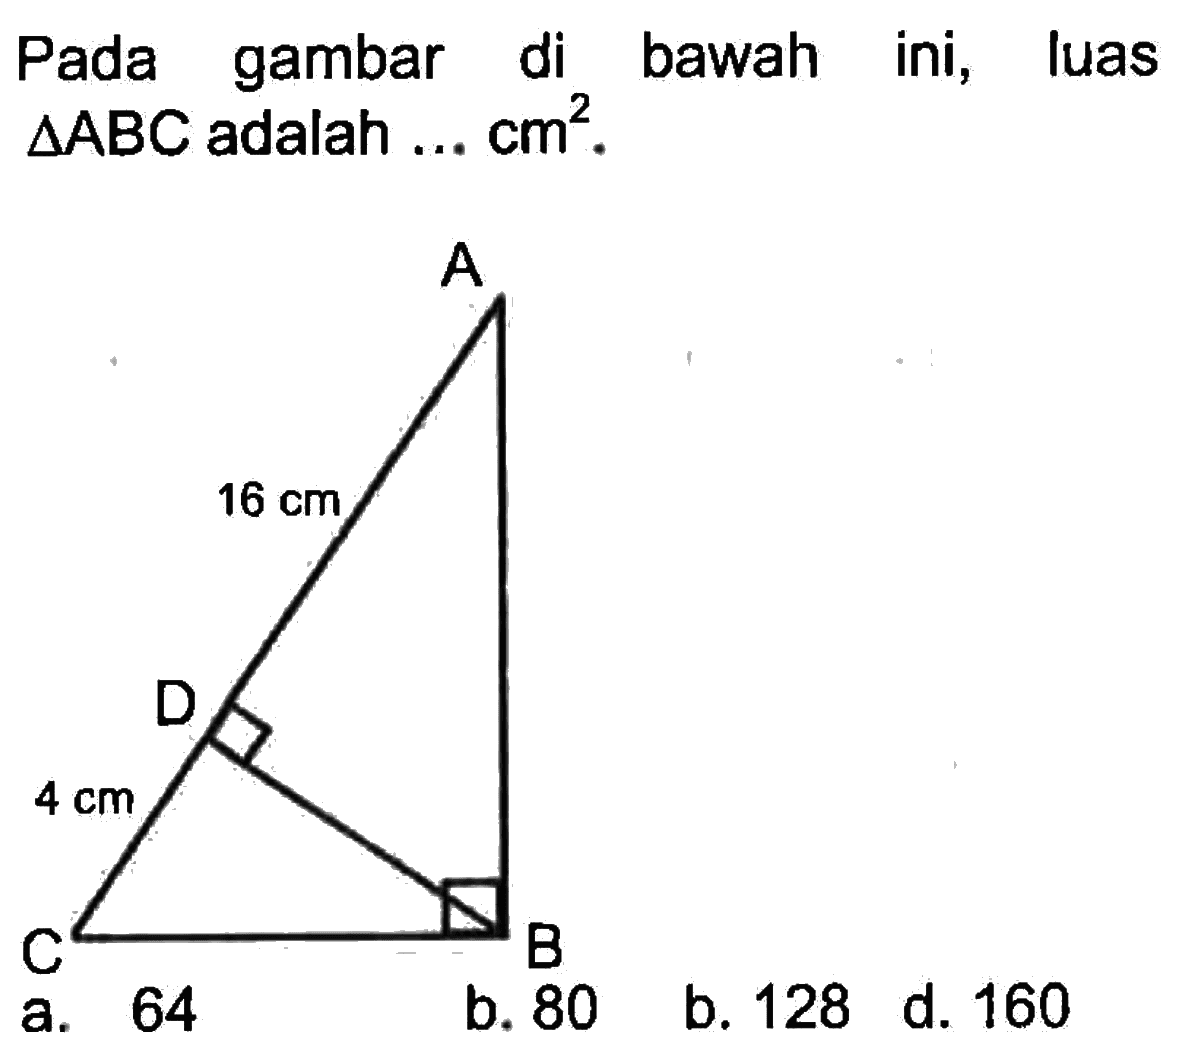 Pada gambar di bawah ini, luas  segitiga ABC  adalah ...  cm^2 .